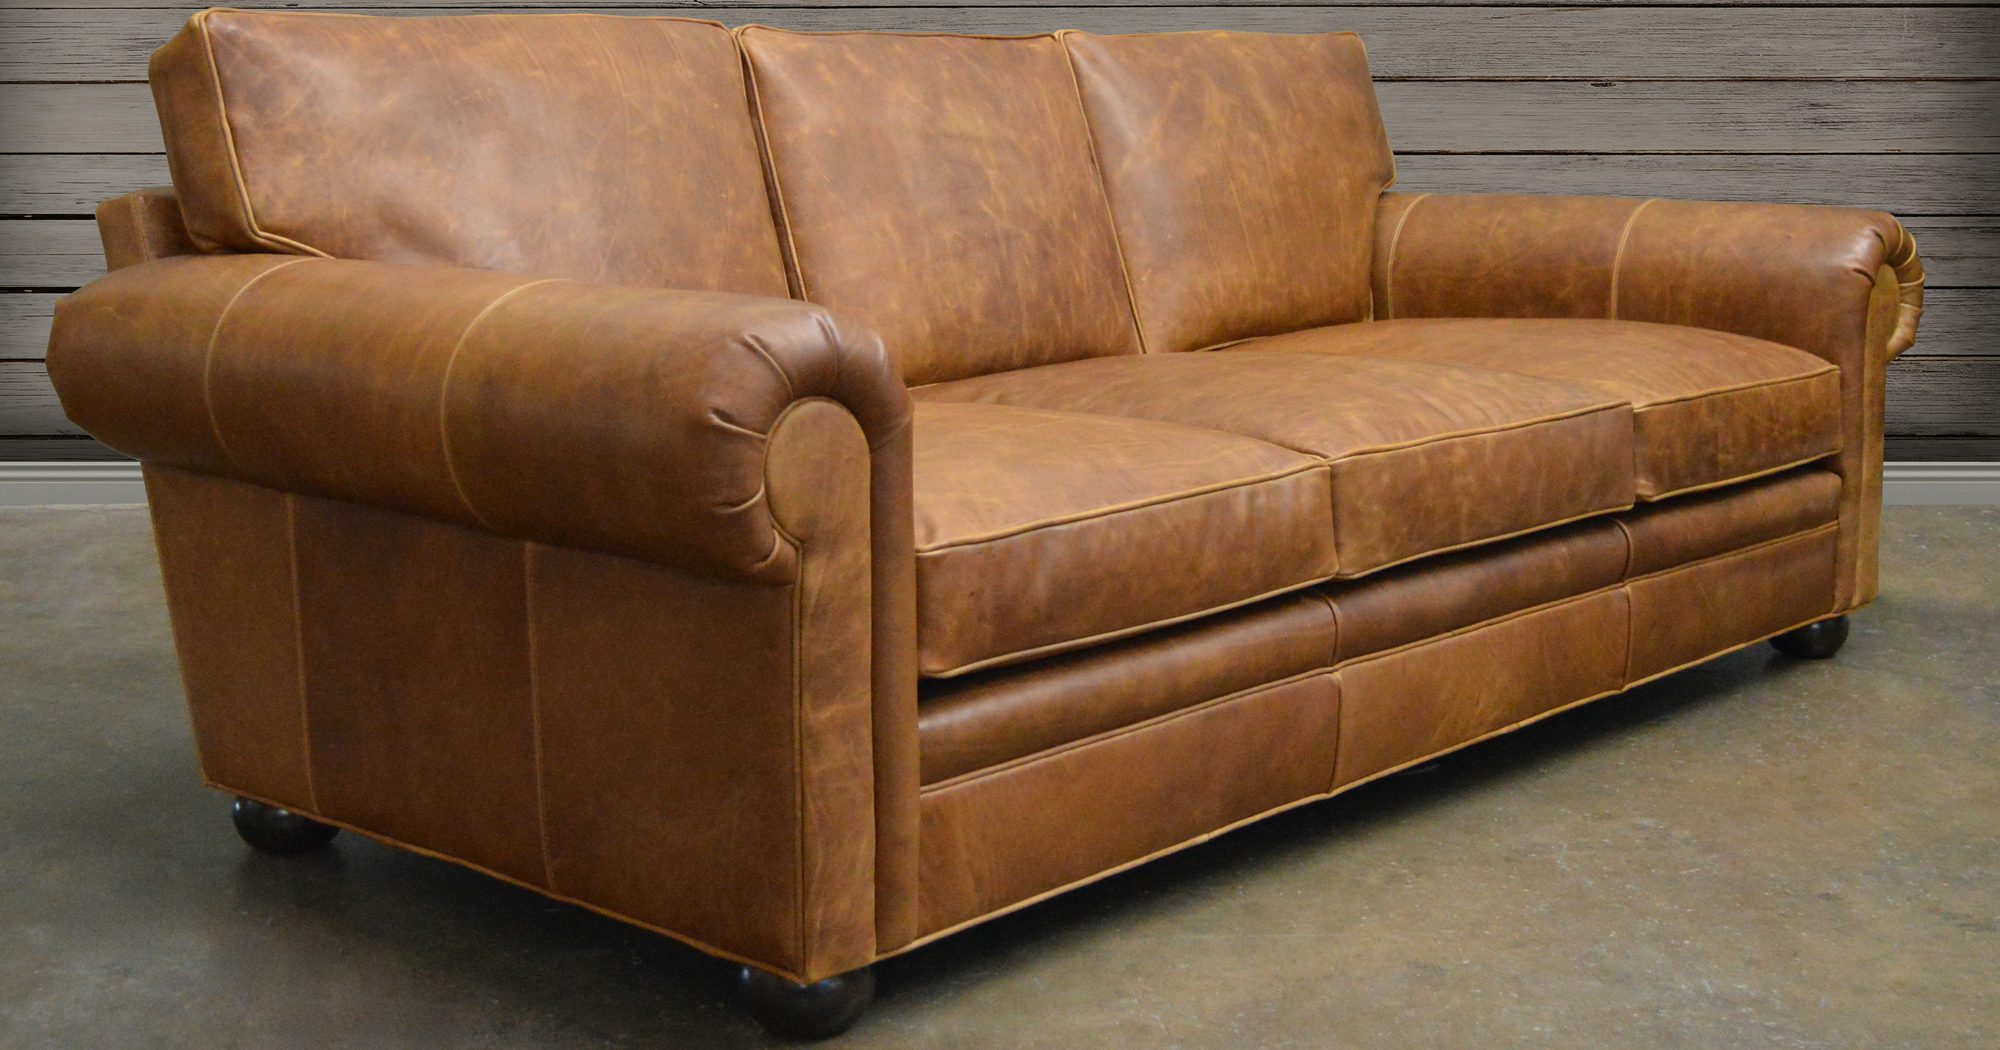 Langston Leather Sofa in Italian Brentwood Tan Leather